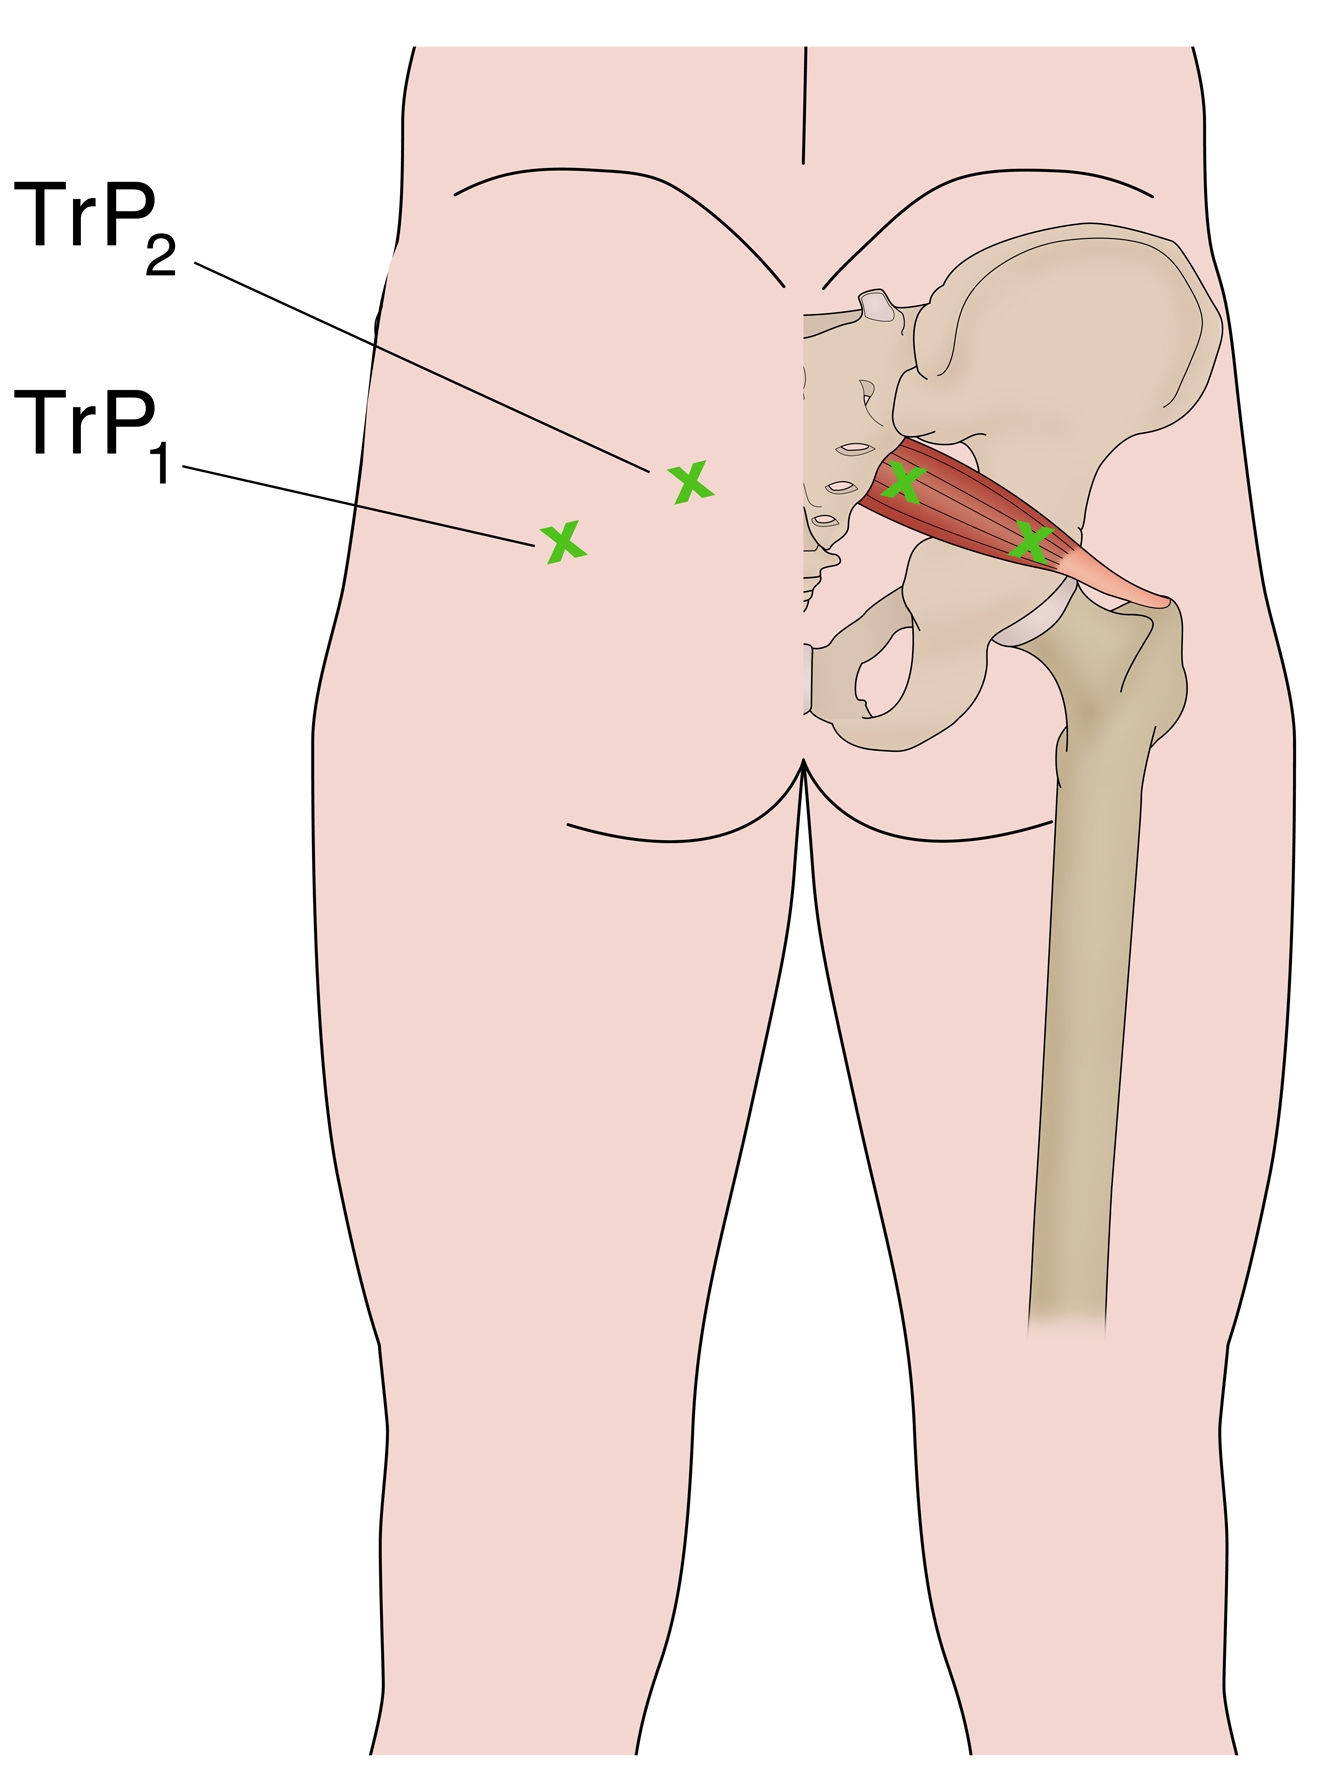 Figure 4: Myofascial trigger point location